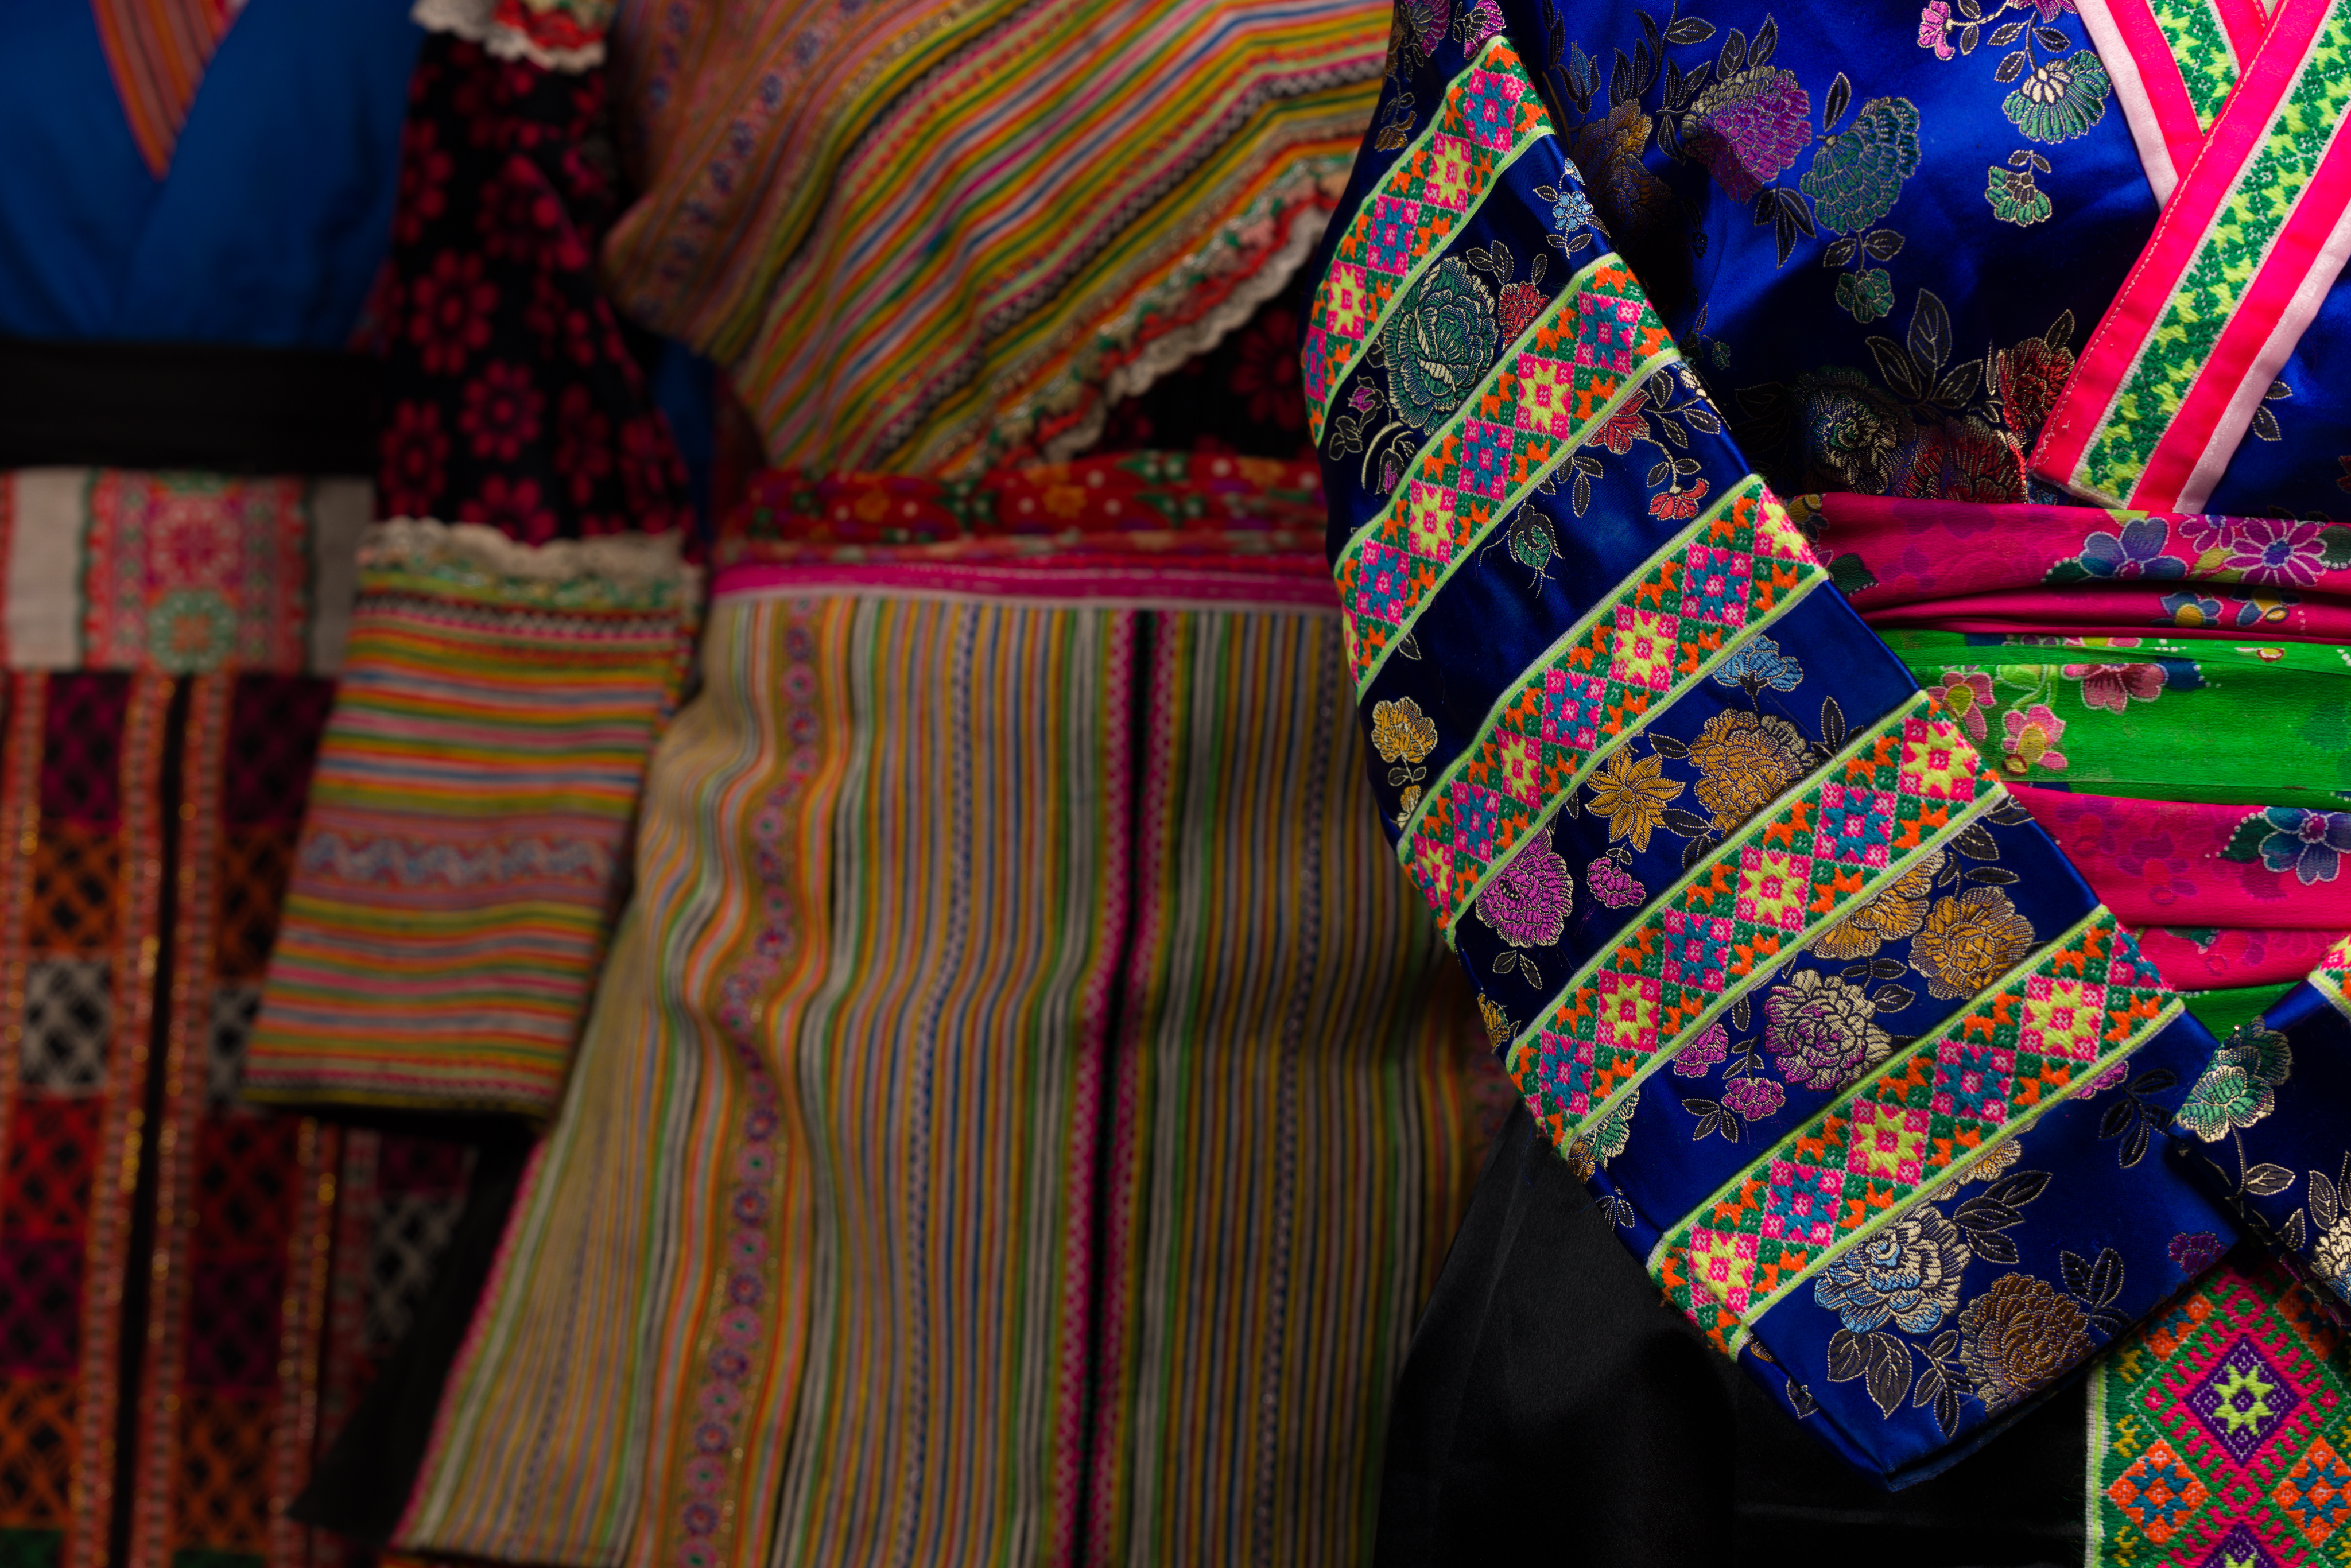 cloth as community fabric detail